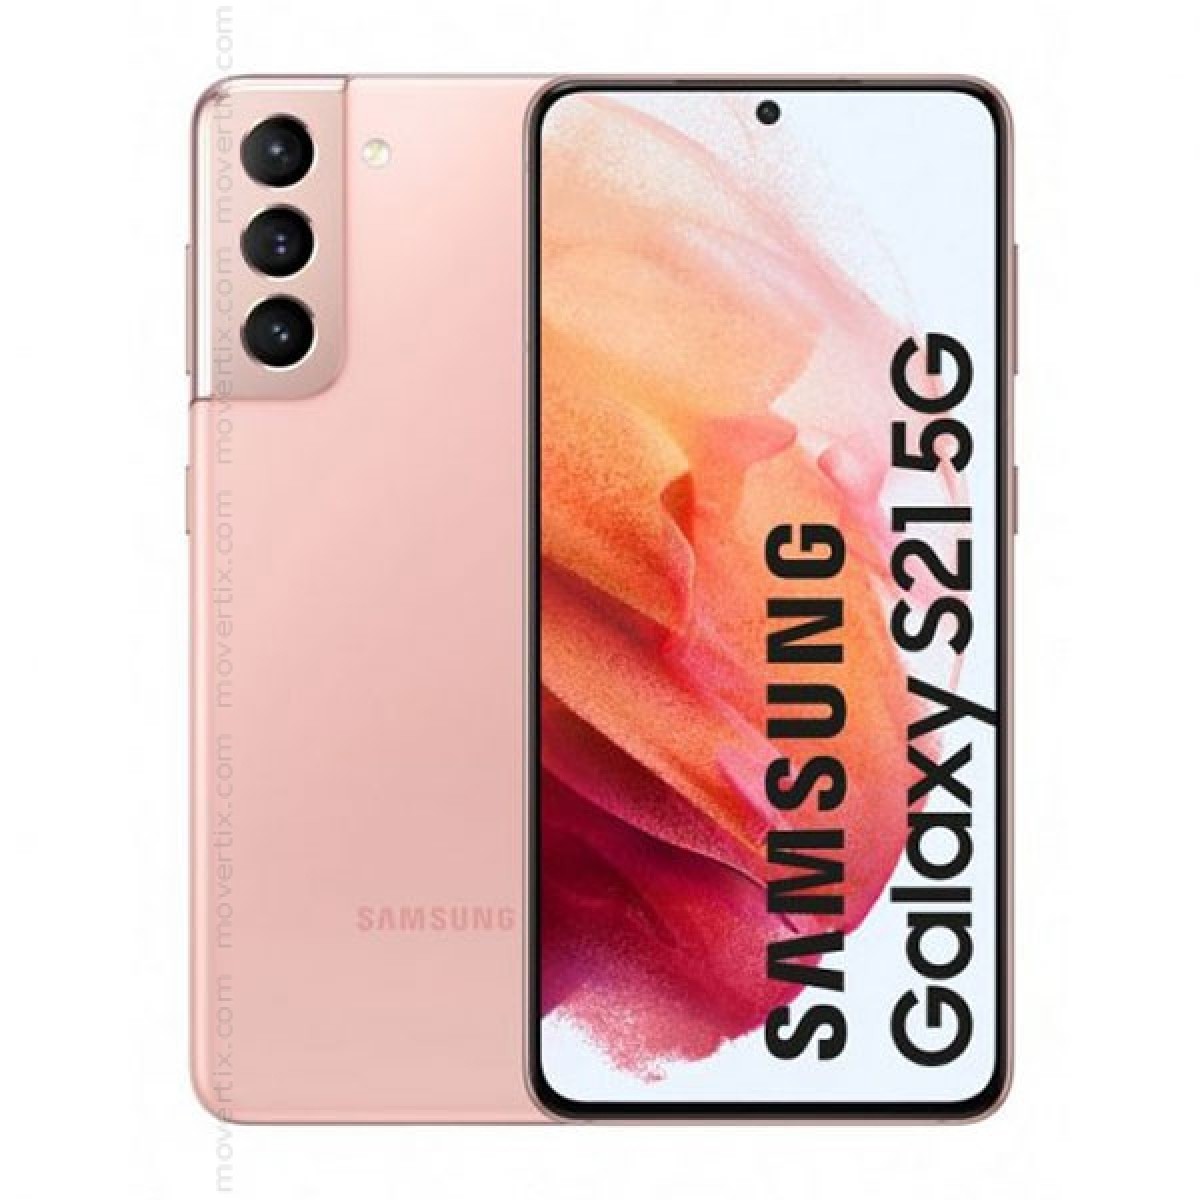 Samsung Galaxy S21 5G Phantom Pink 128GB and 8GB RAM - SM-G991B